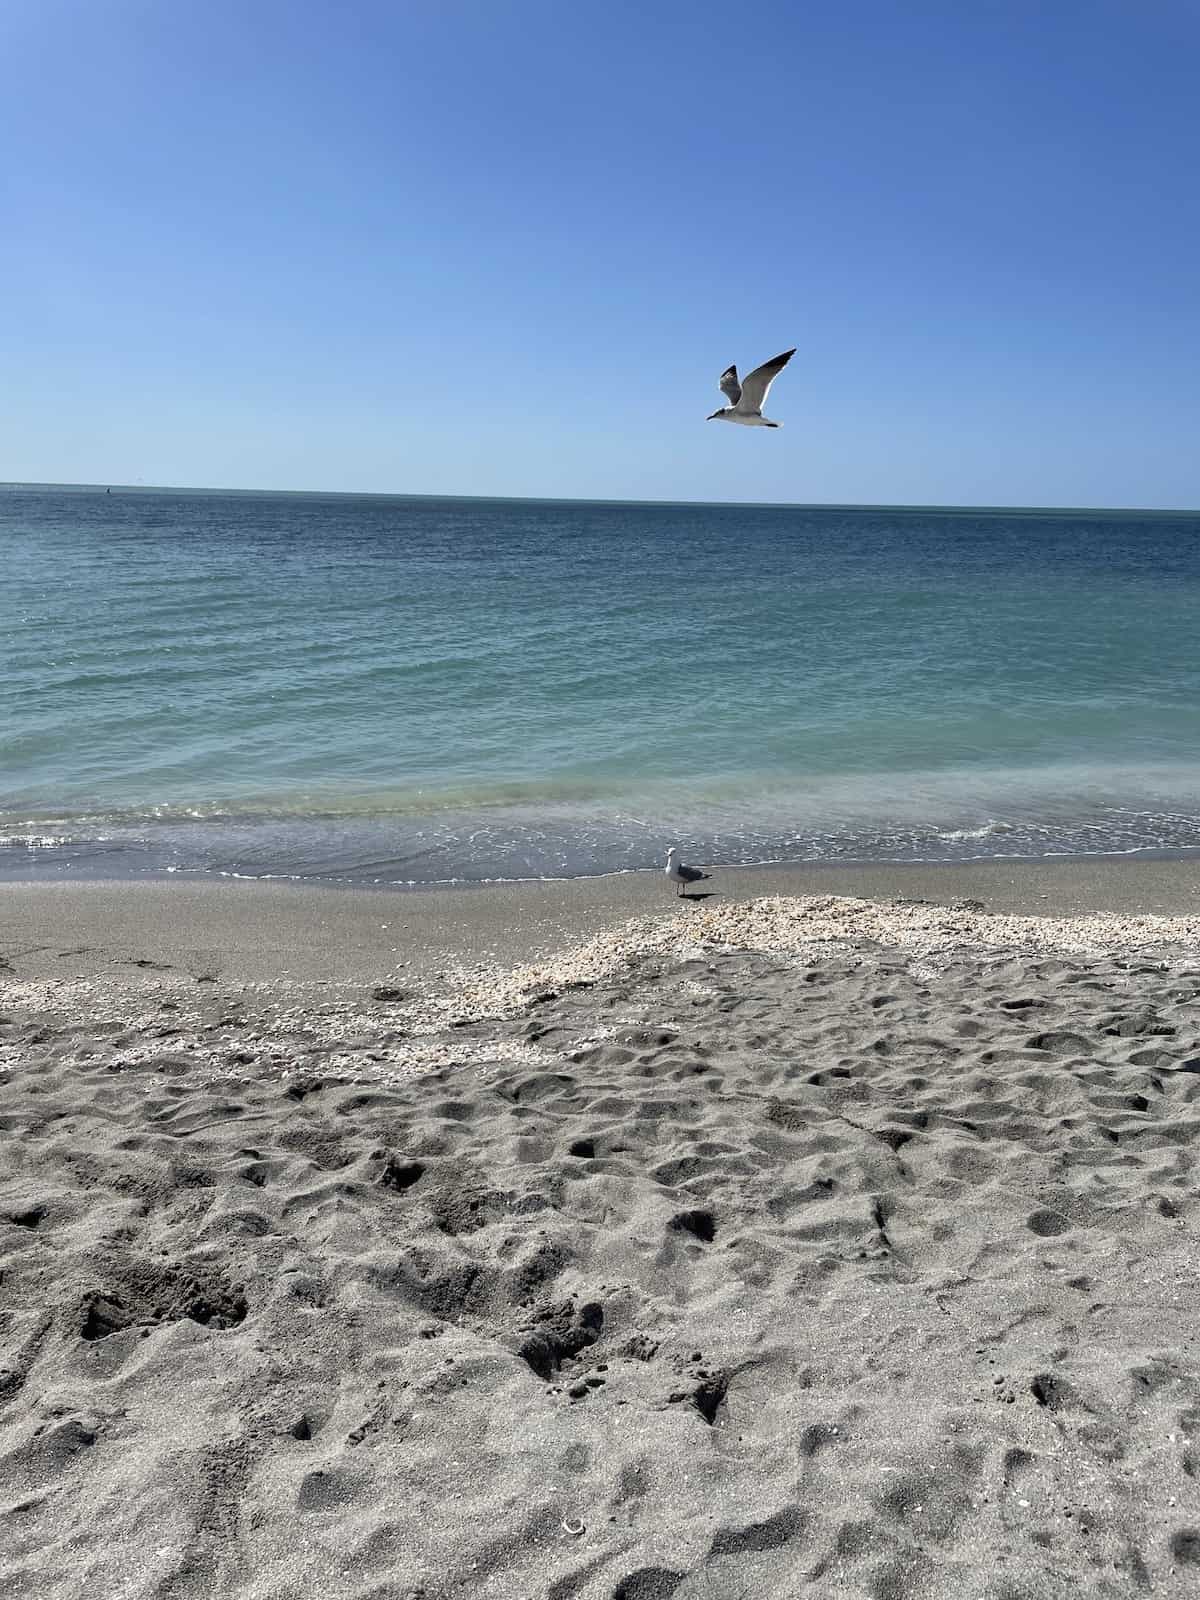 Beach with seagulls.